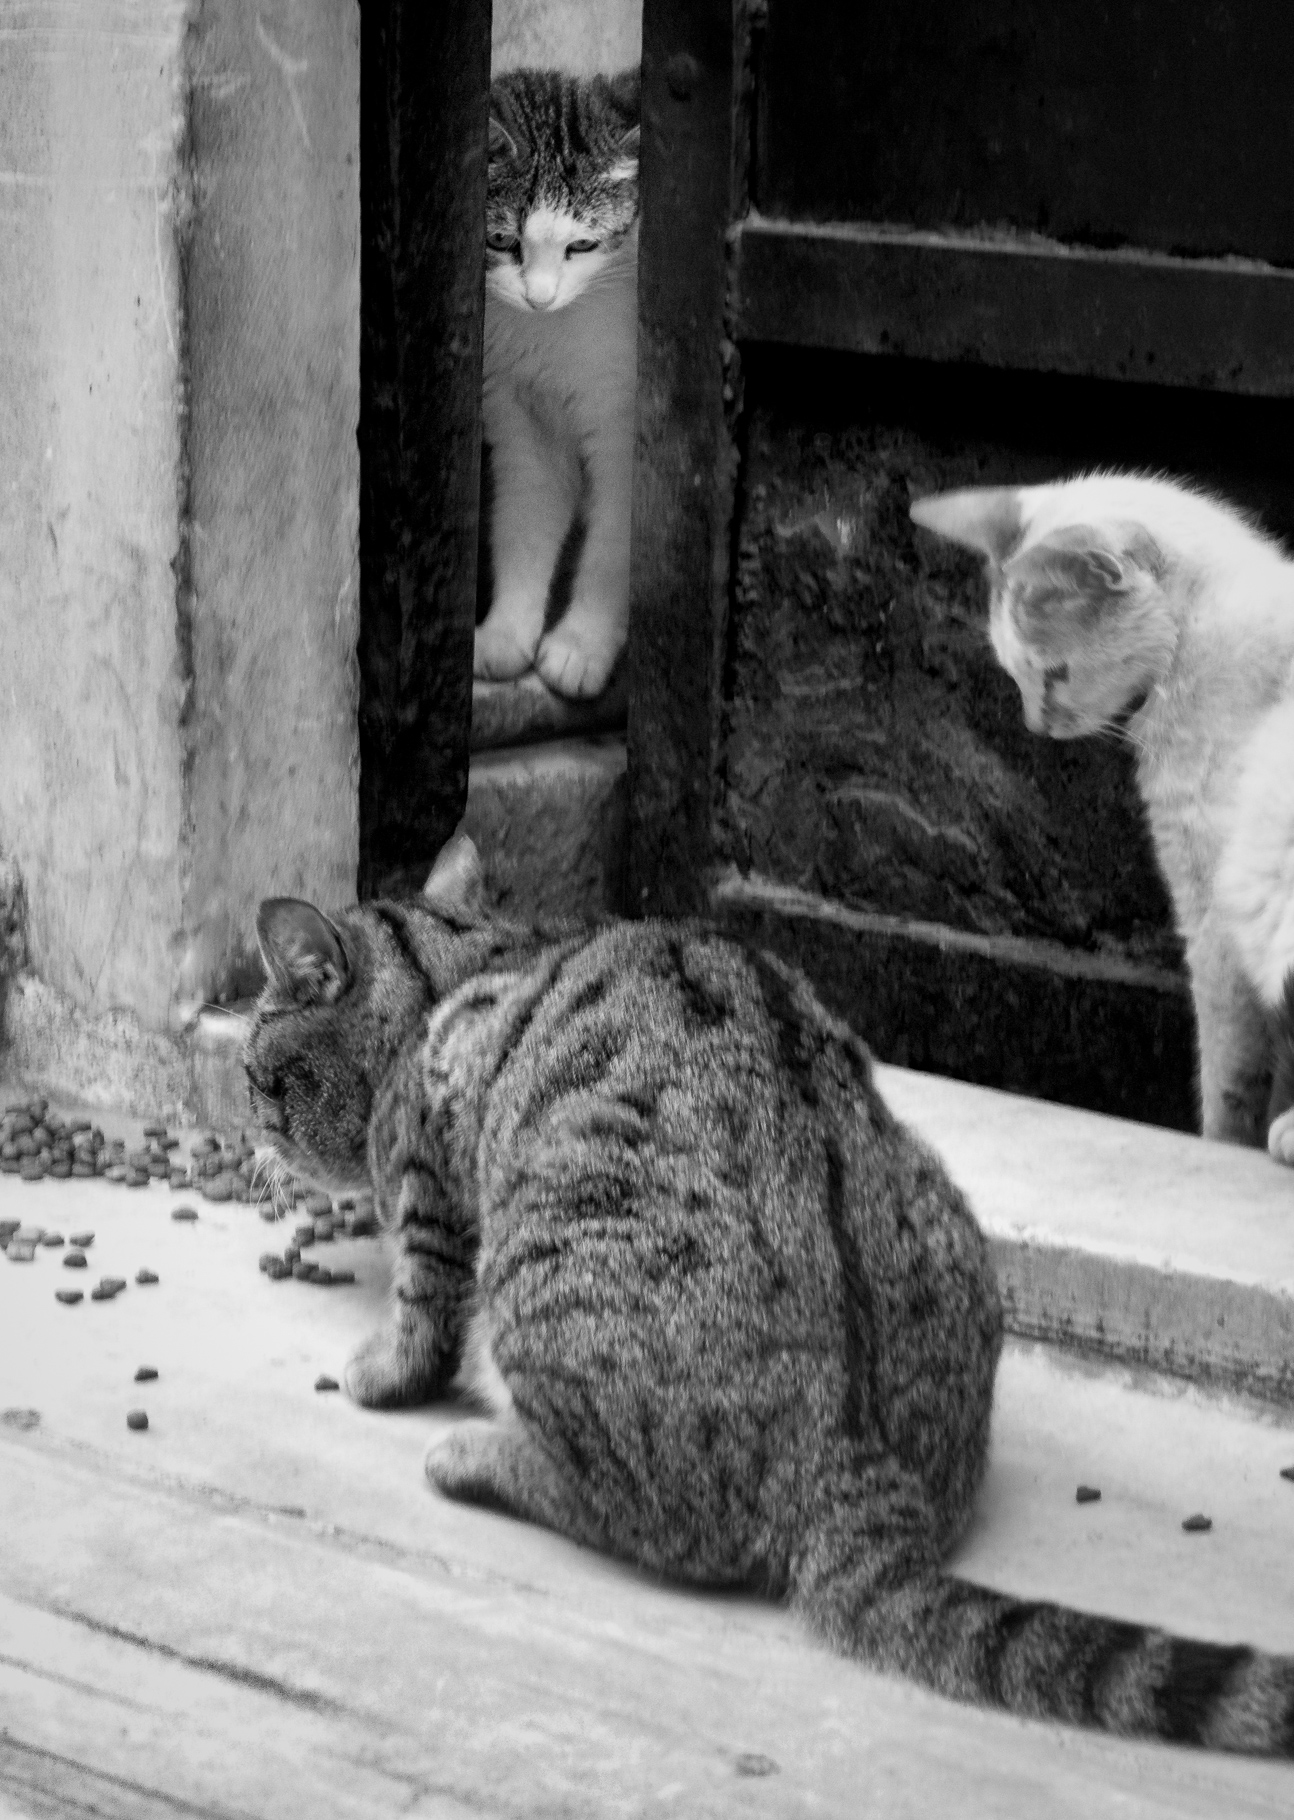 Hungry Cats #2. Istiklal Caddesi, Istanbul, May 2010